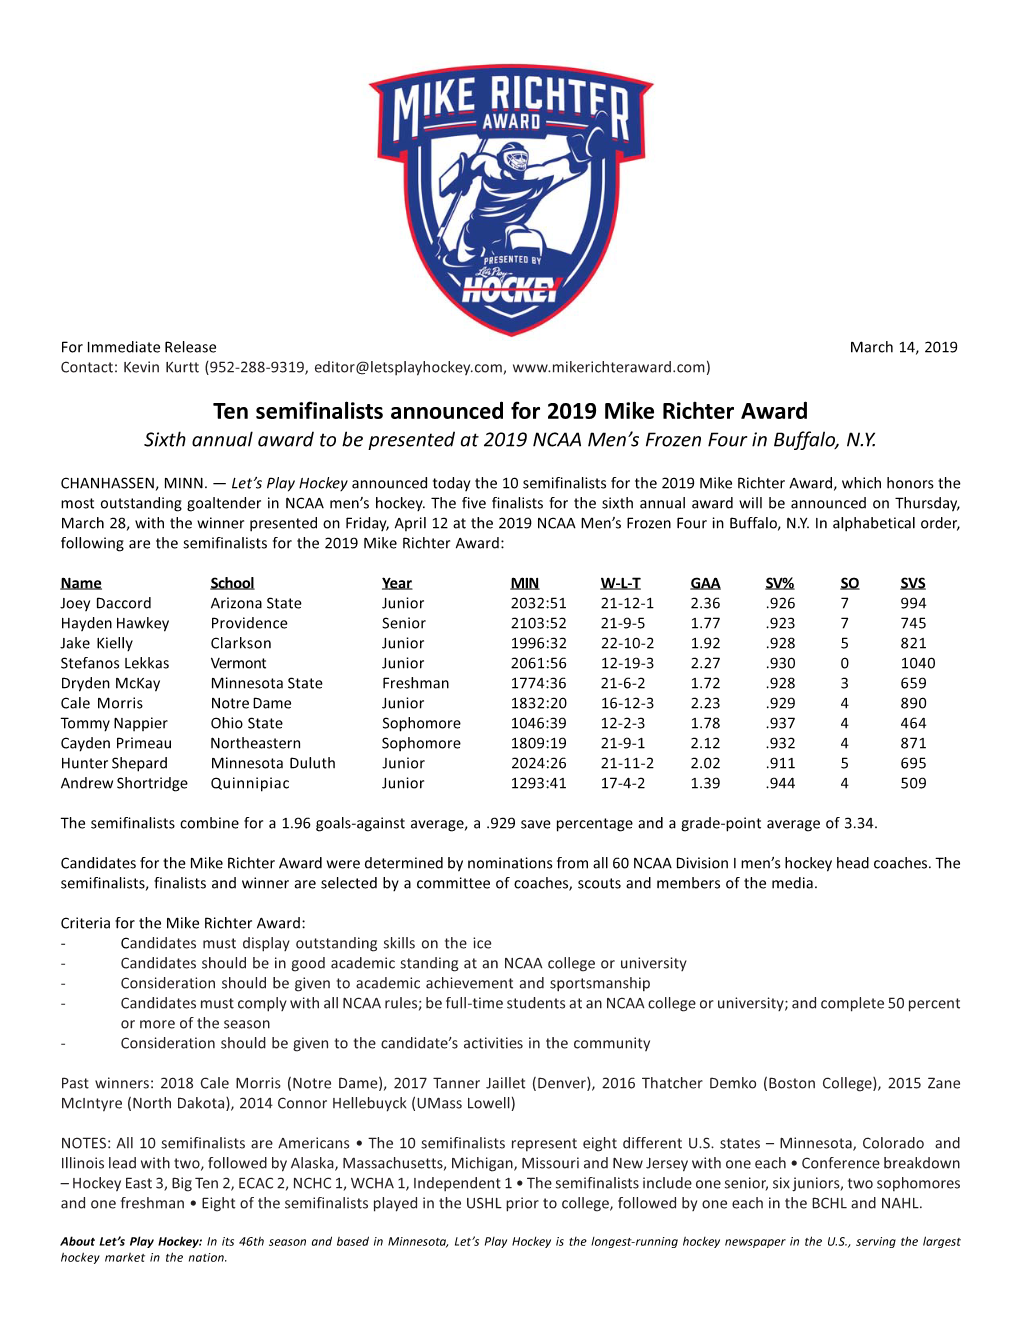 2019 Mike Richter Award Semifinalists